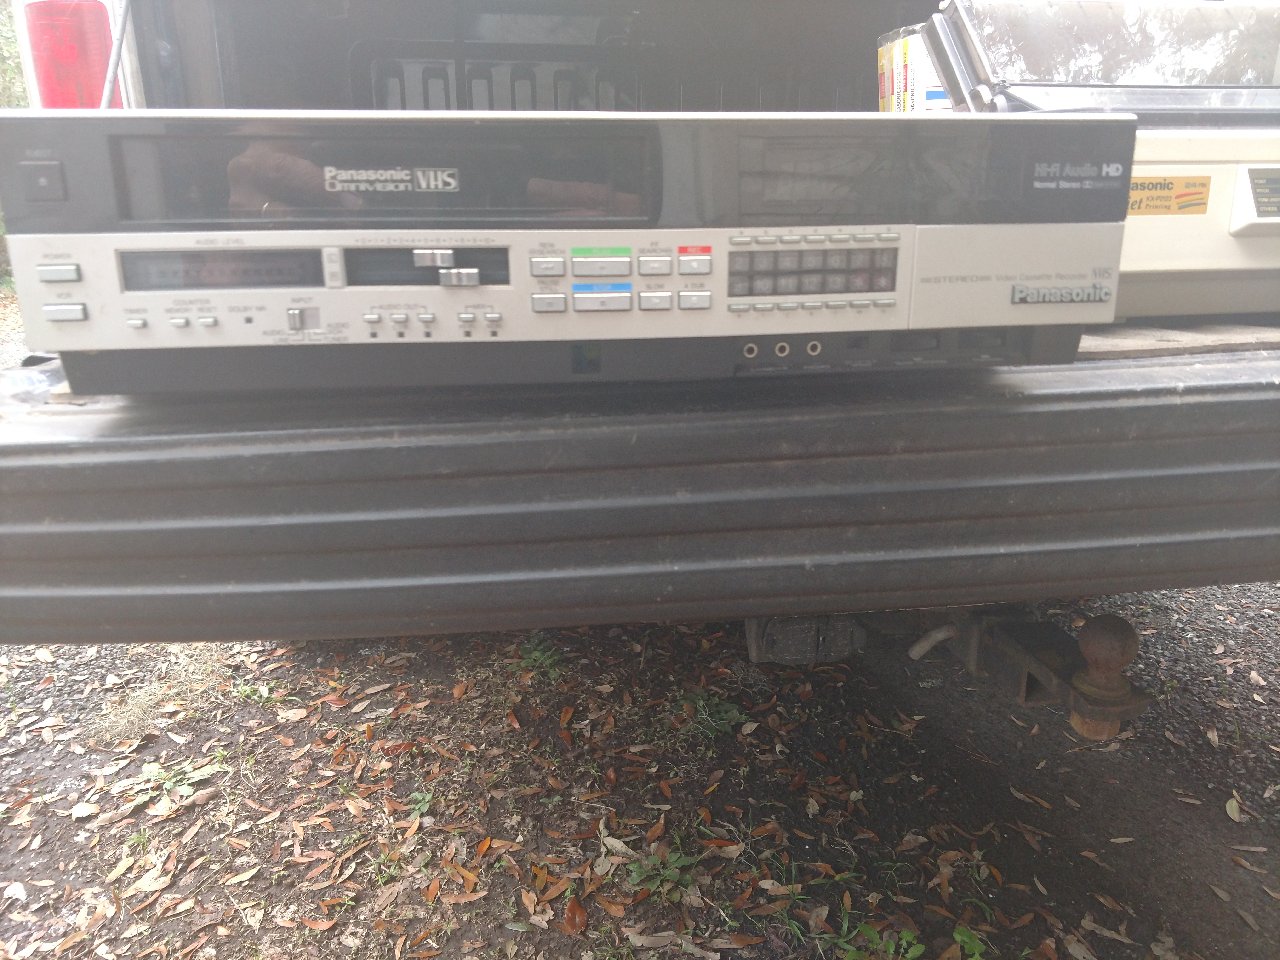 Panasonic VHS Recorder1.jpg